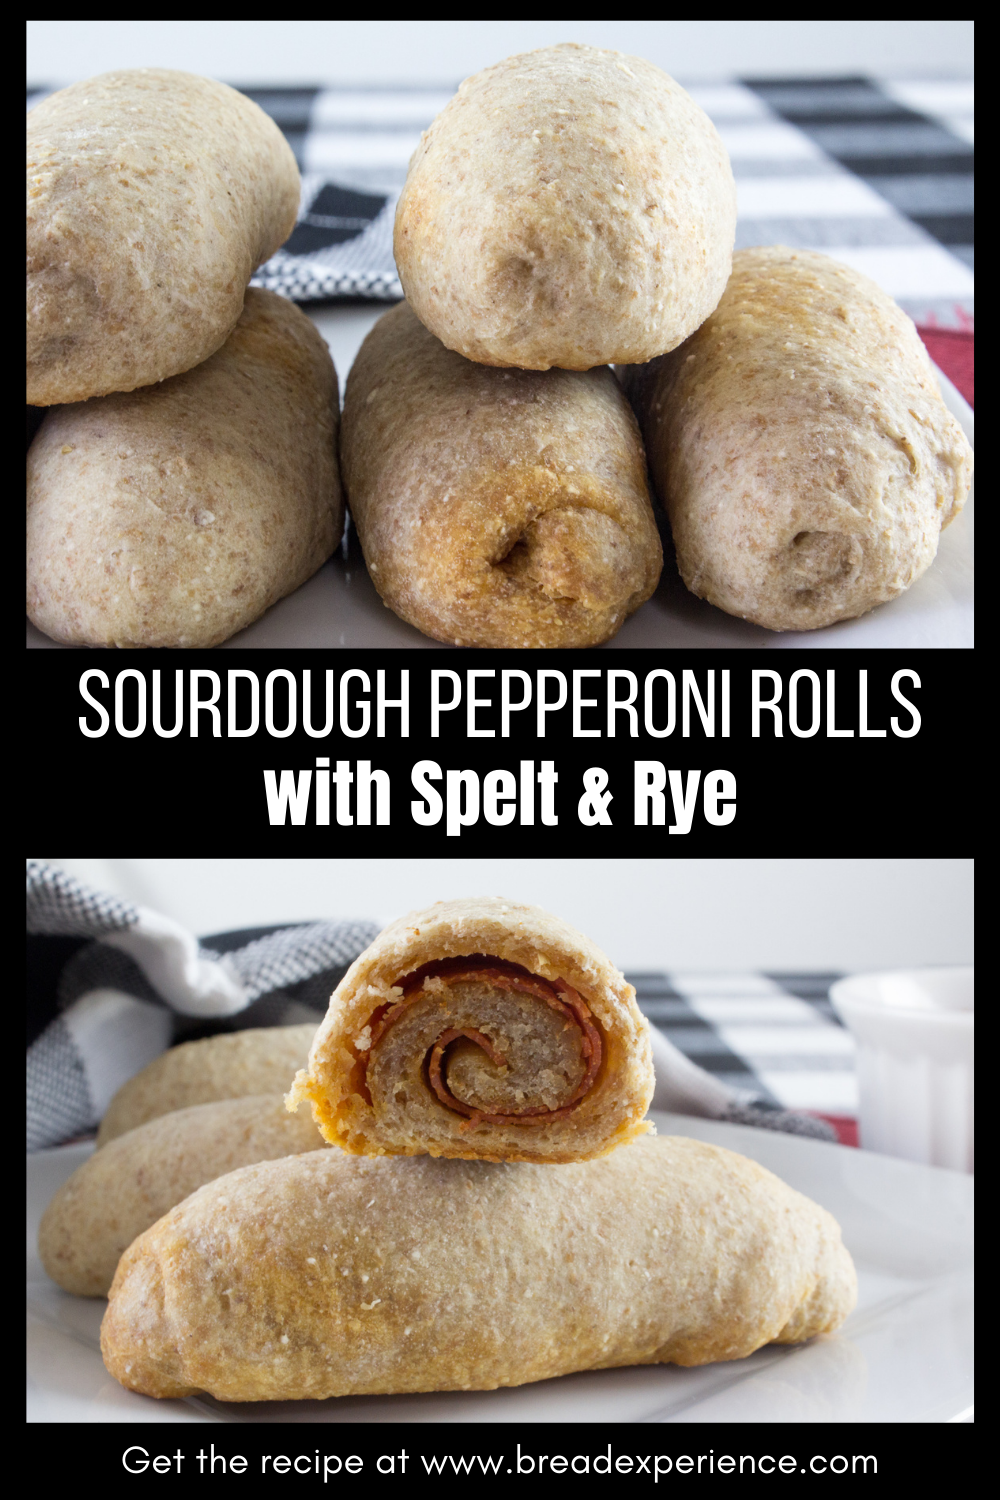 Sourdough Pepperoni Rolls with Spelt & Rye